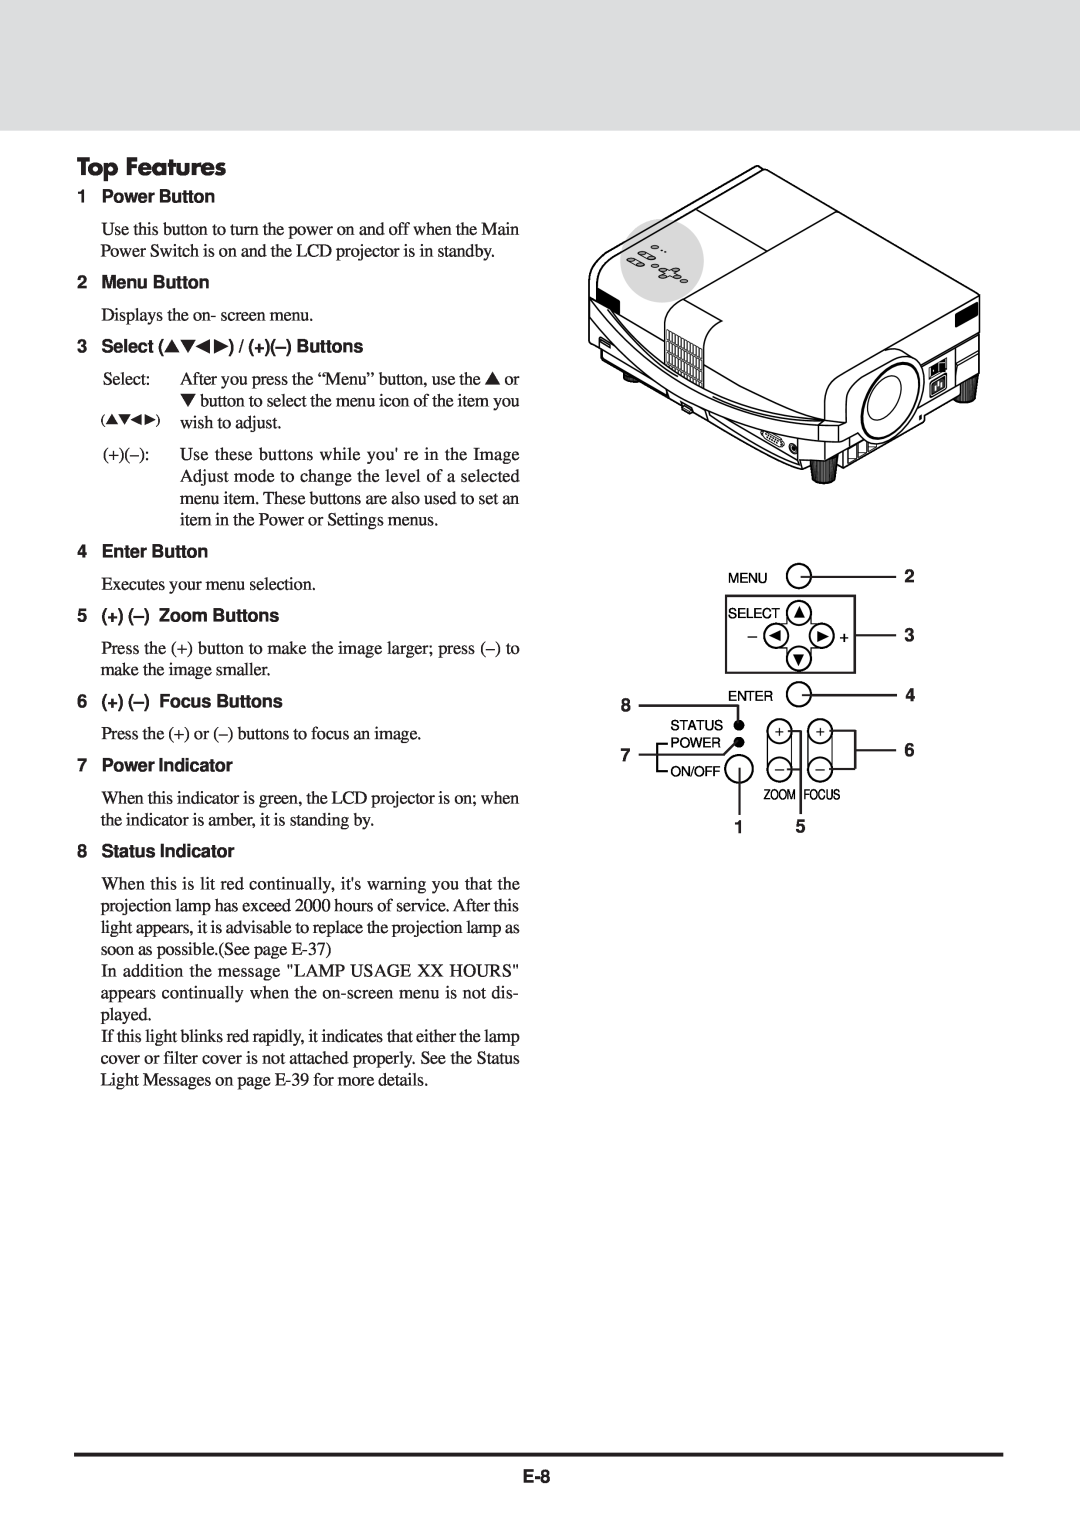 NEC MT830 user manual Top Features, 1Power Button, 2Menu Button, 3Select / +-Buttons, 4Enter Button, 5+ -Zoom Buttons 